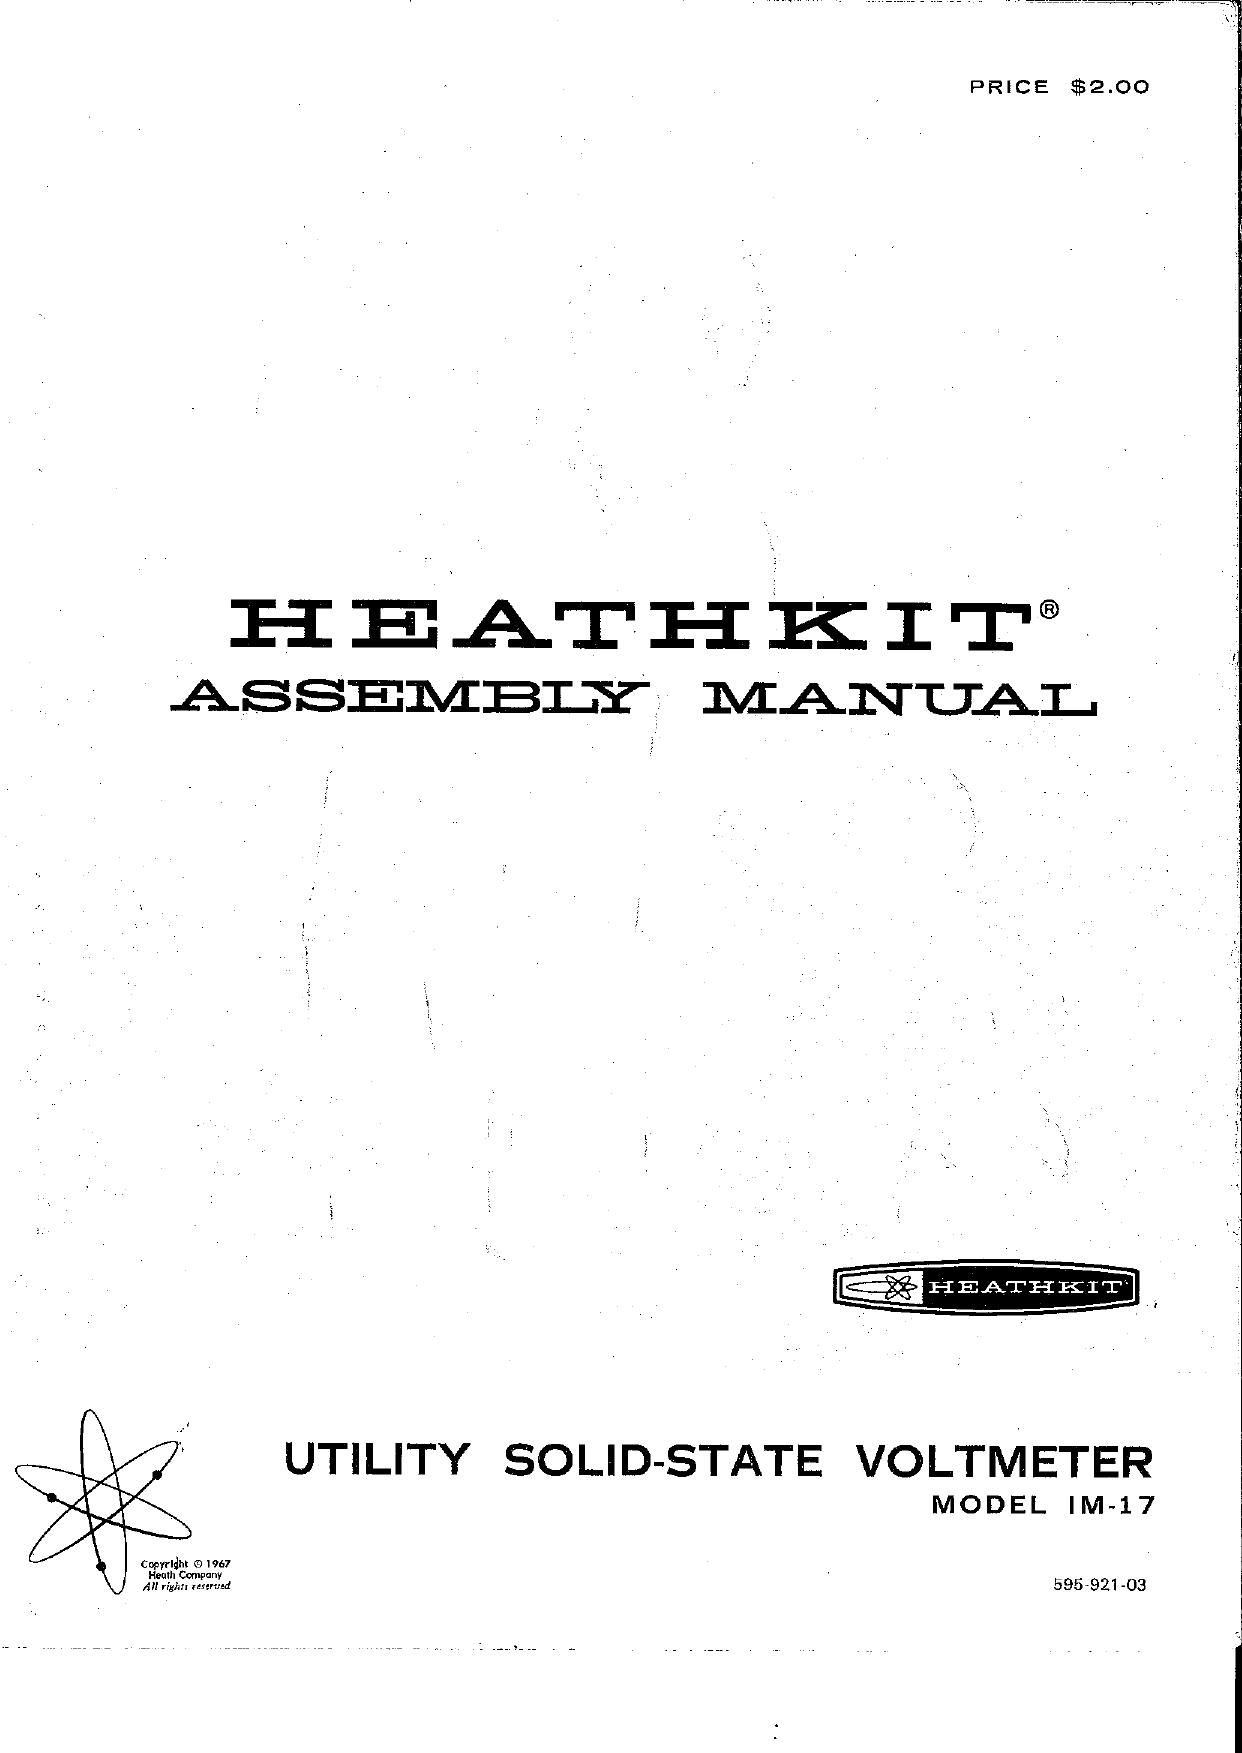 Assembly Manual-Anleitung für Heathkit IM-17 